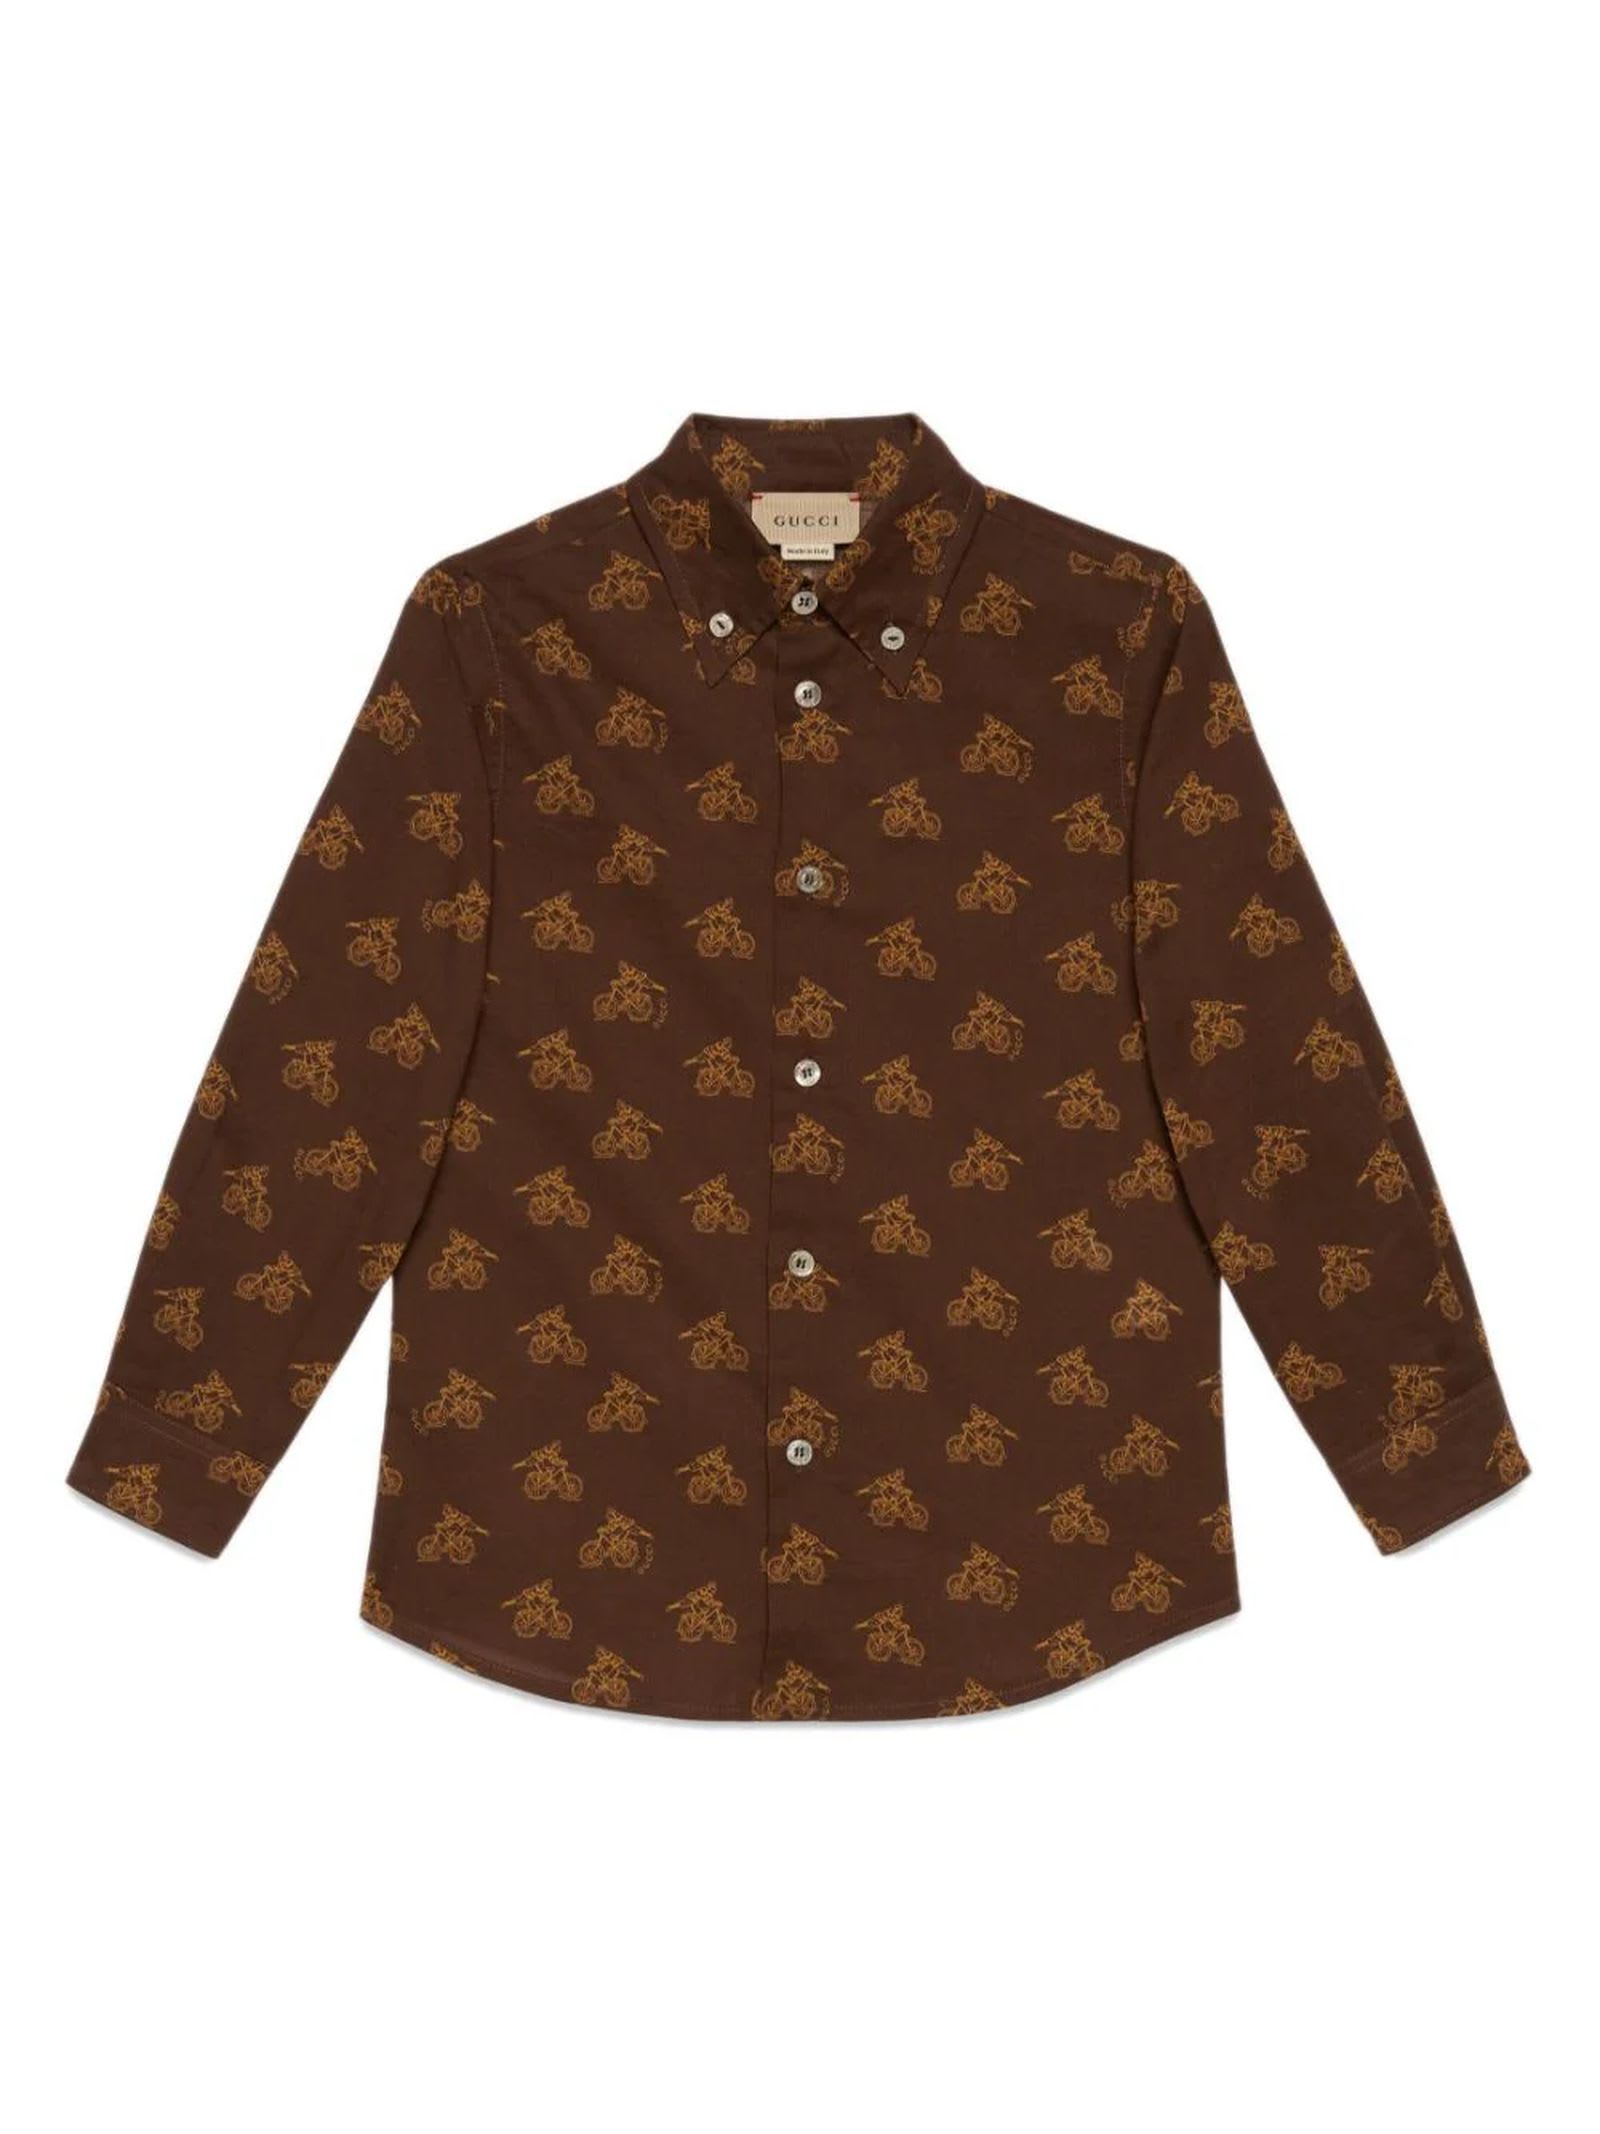 Gucci Chocolate Brown Cotton Shirt